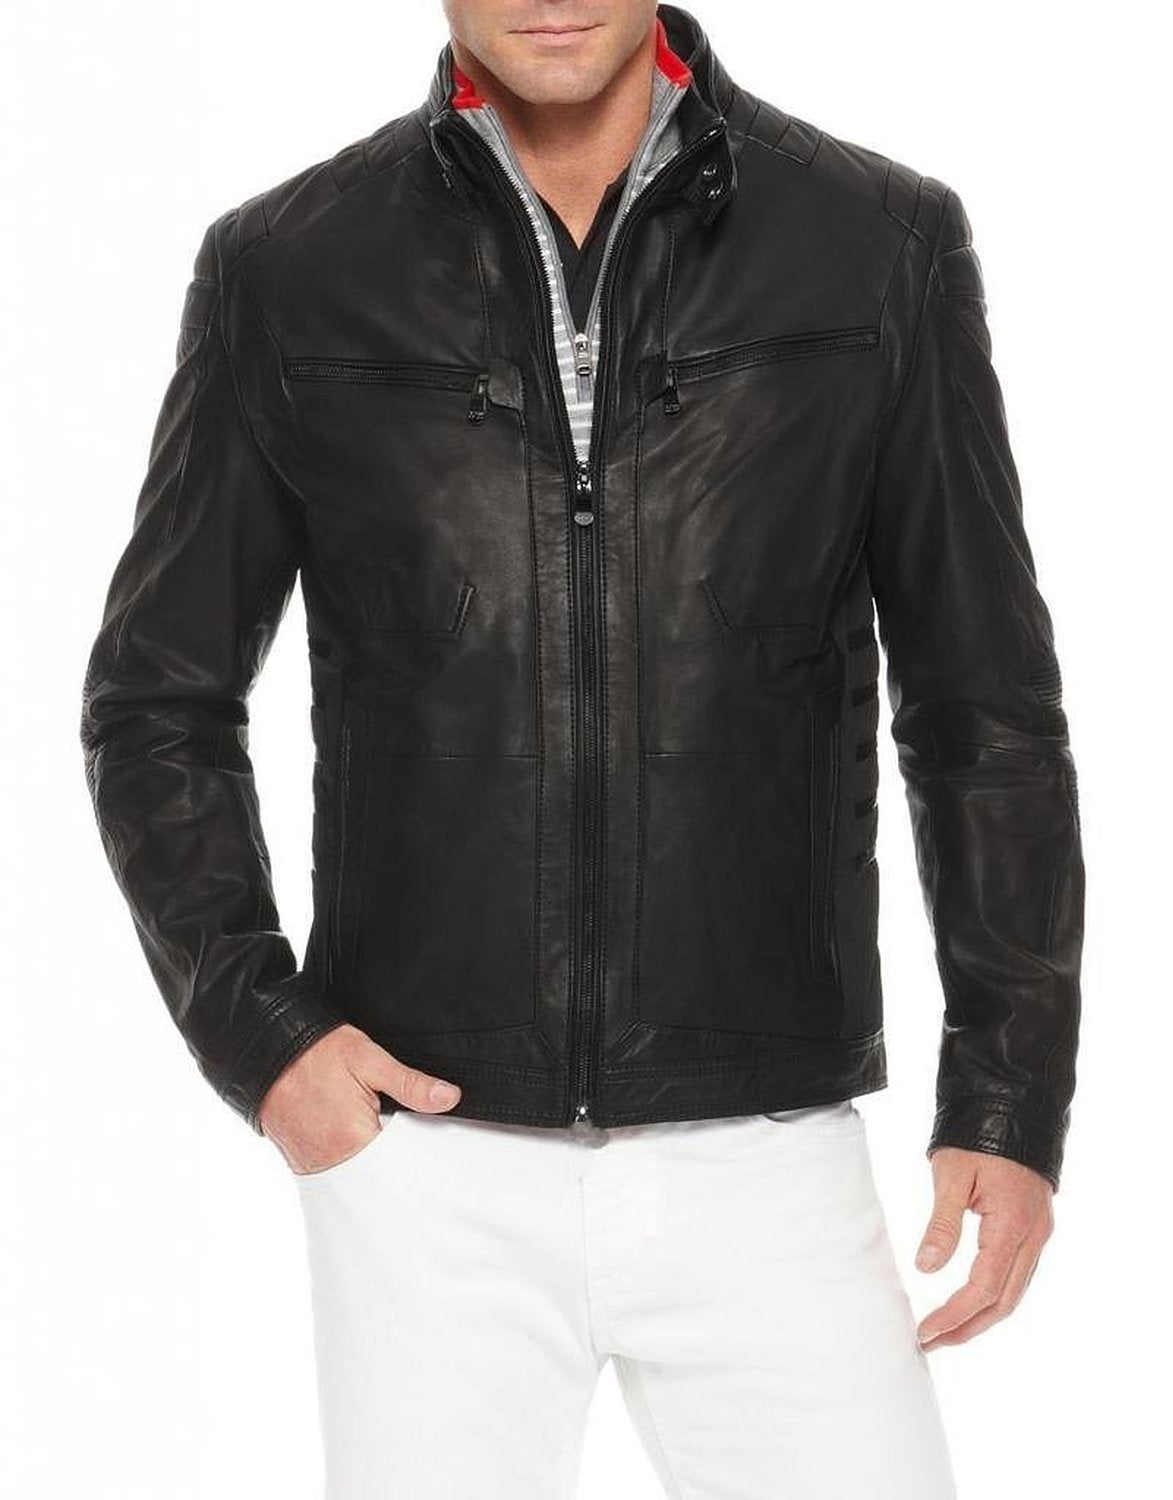 Leather Jackets Hub Mens Genuine Lambskin Leather Jacket (Black, Racer Jacket) - 1501156